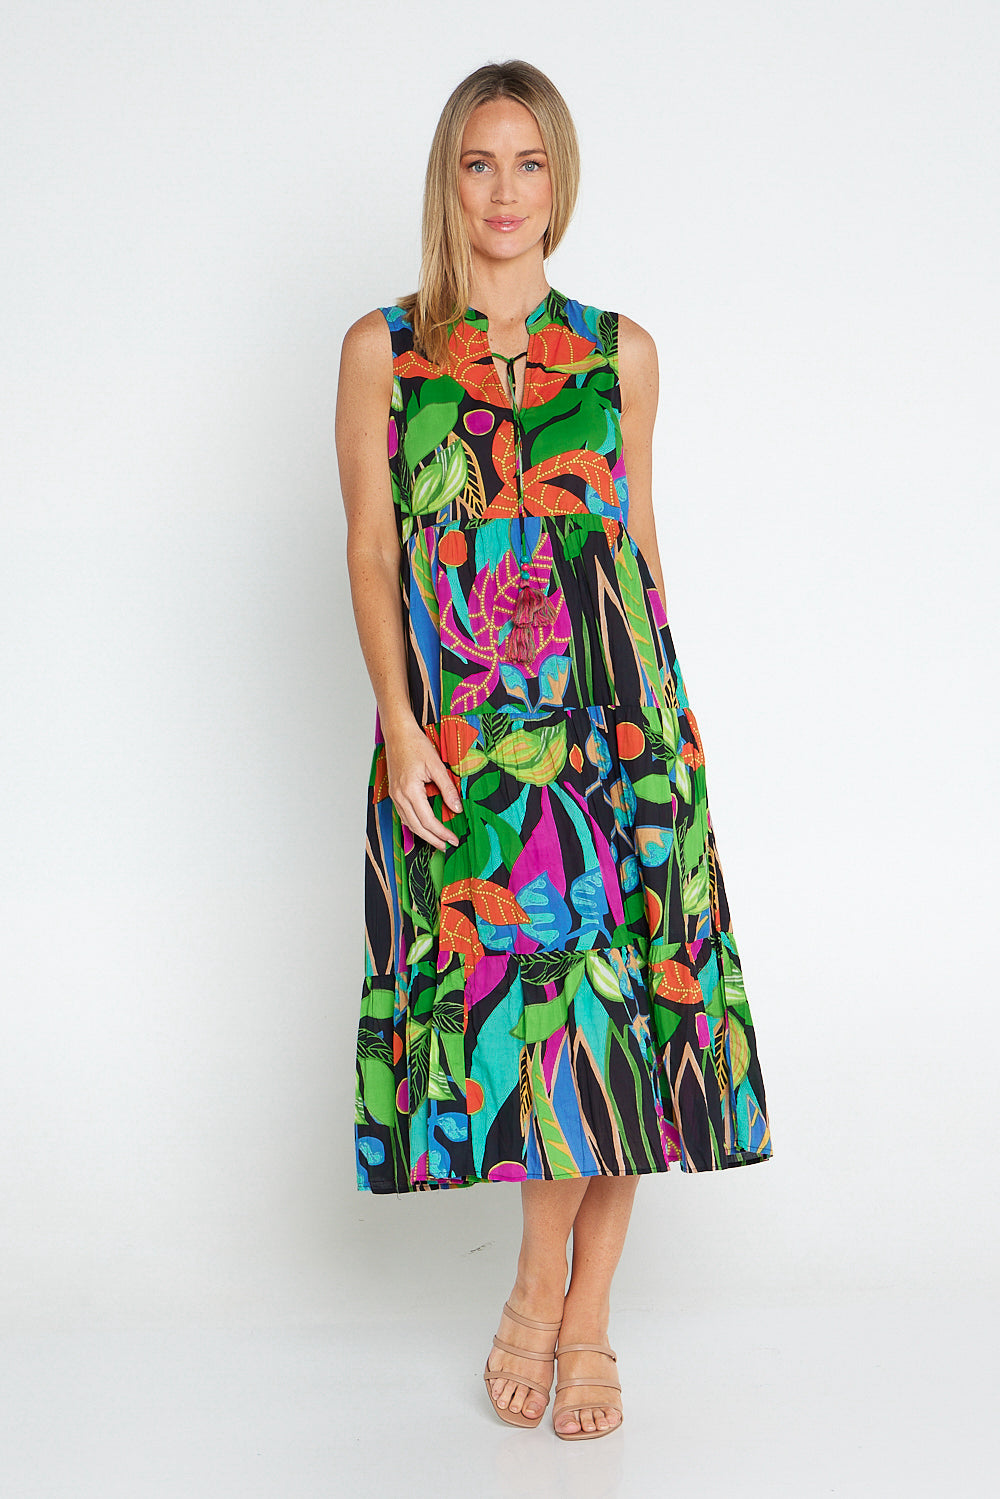 Nicossia Sleeveless Layered Dress - Summer Botanical